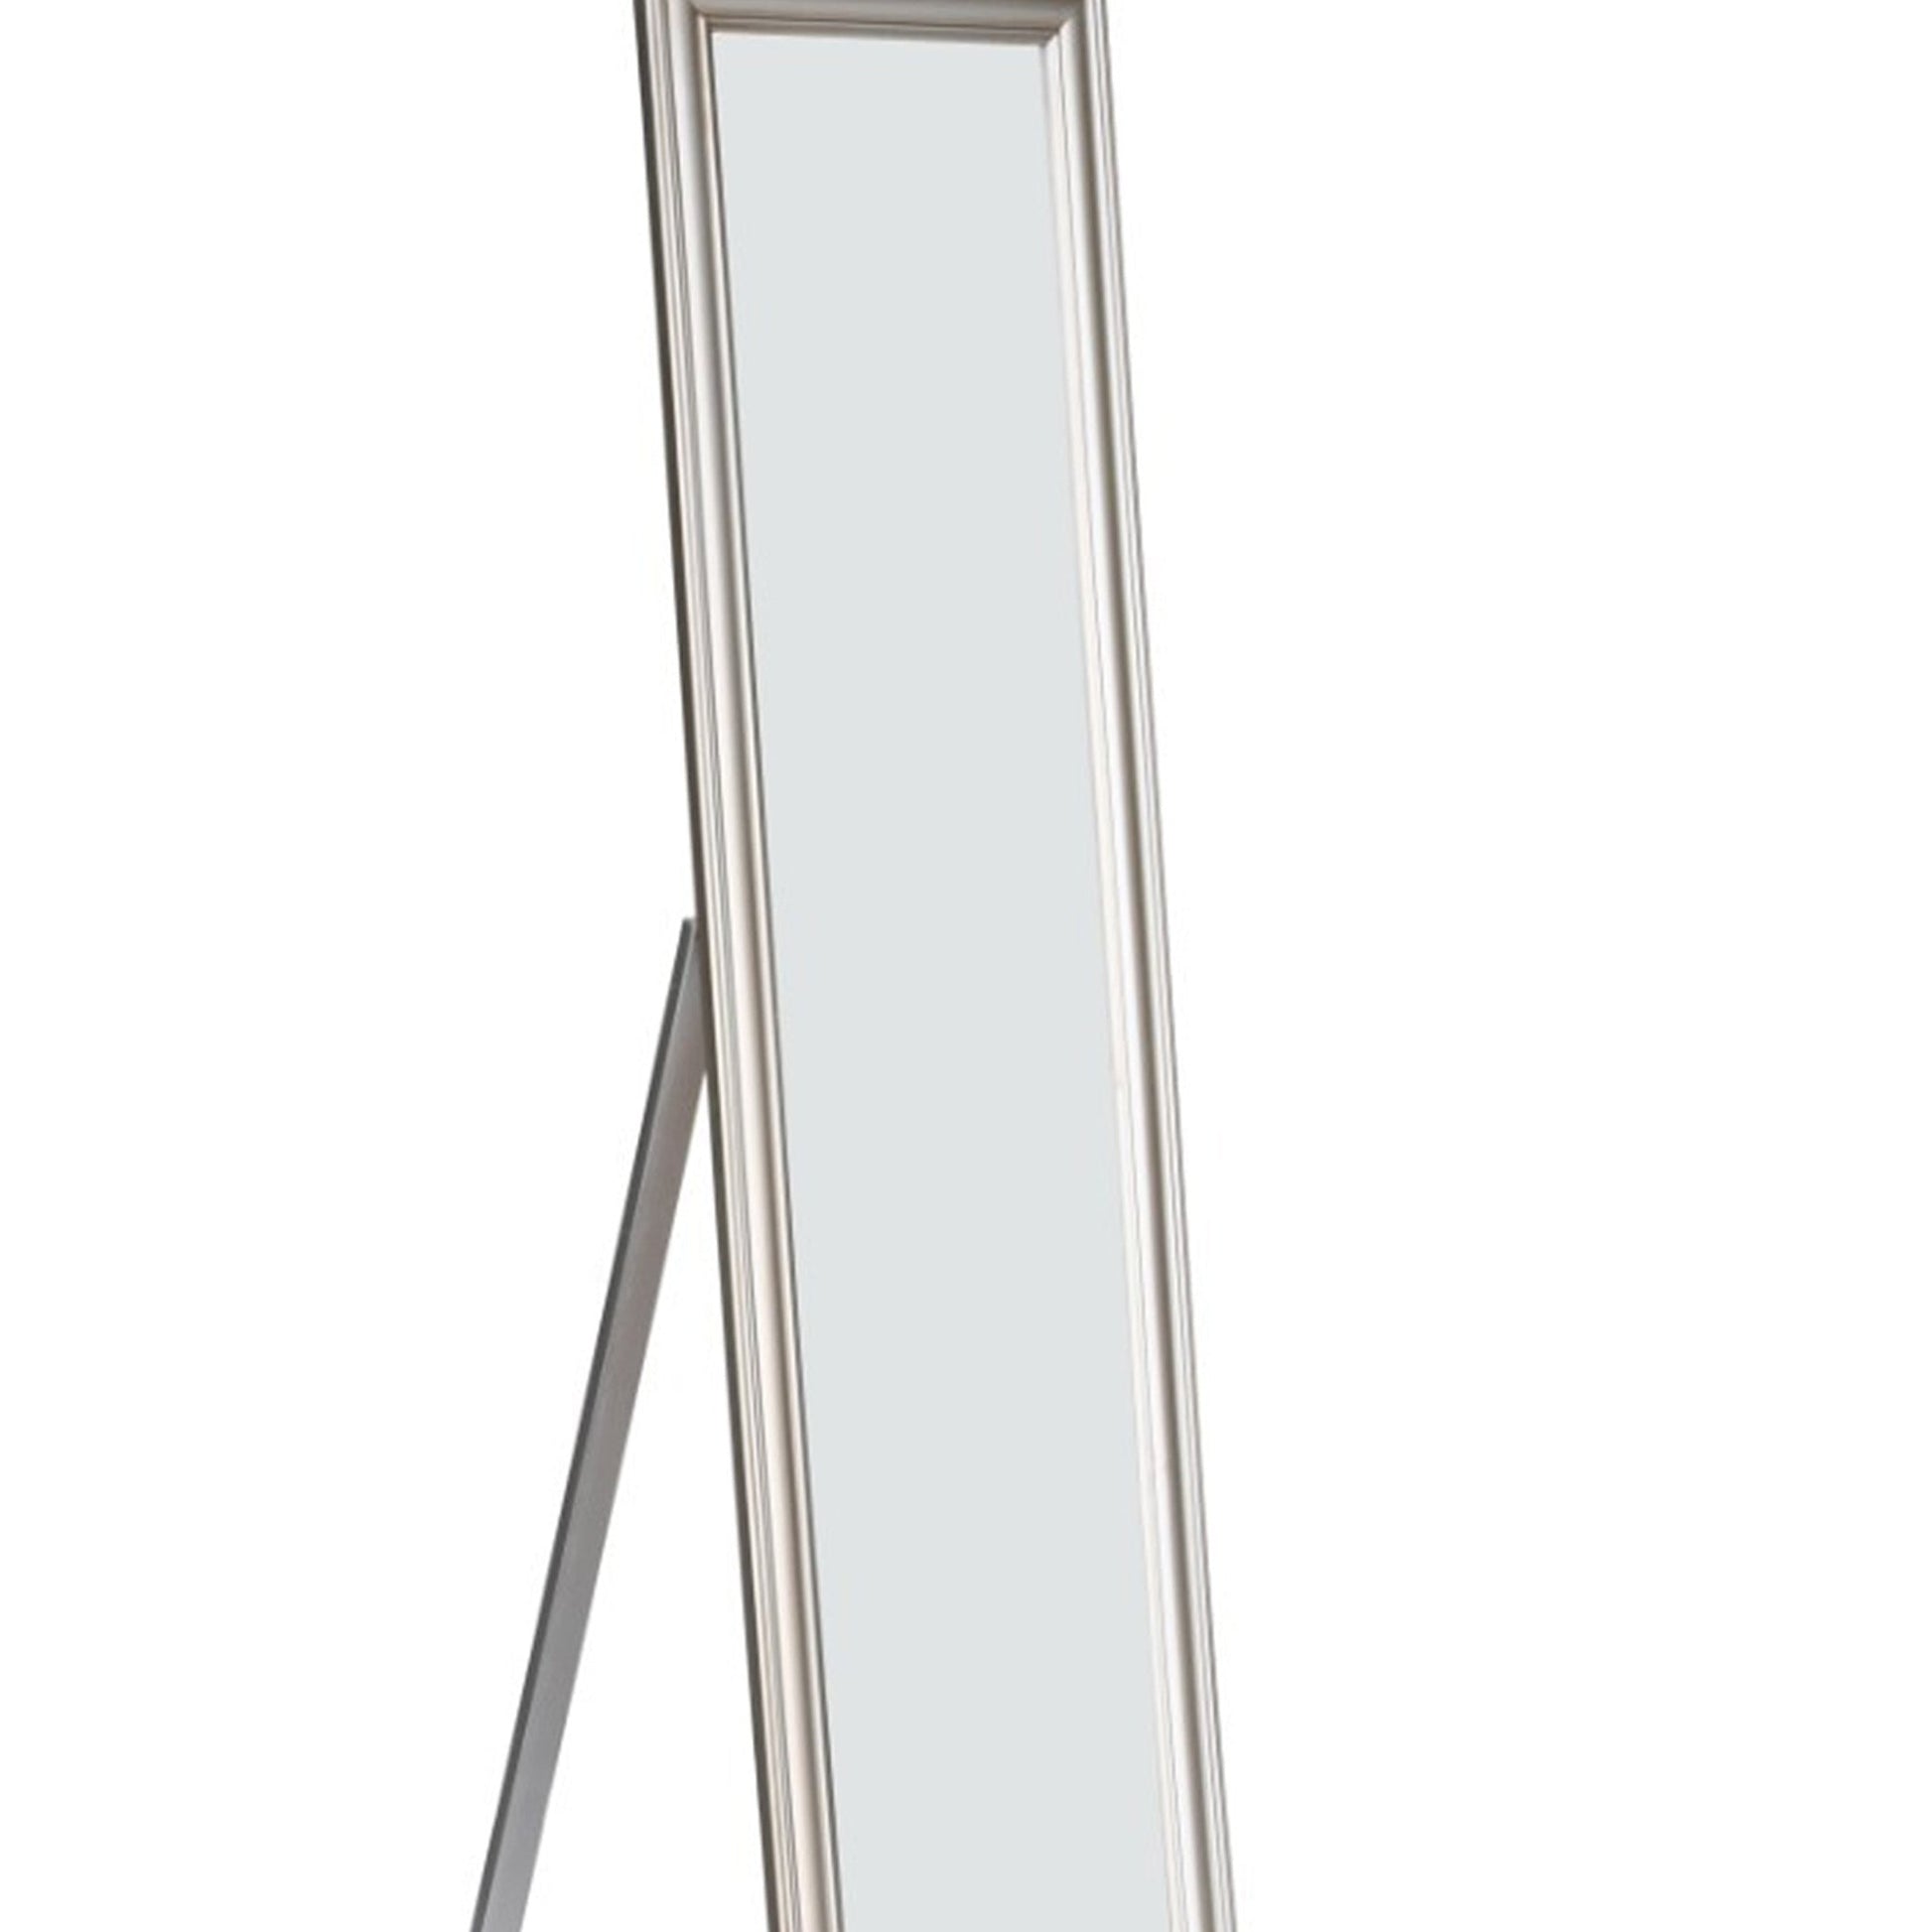 Benzara Elisabetta 63" Silver Full Length Standing Mirror With Decorative Design